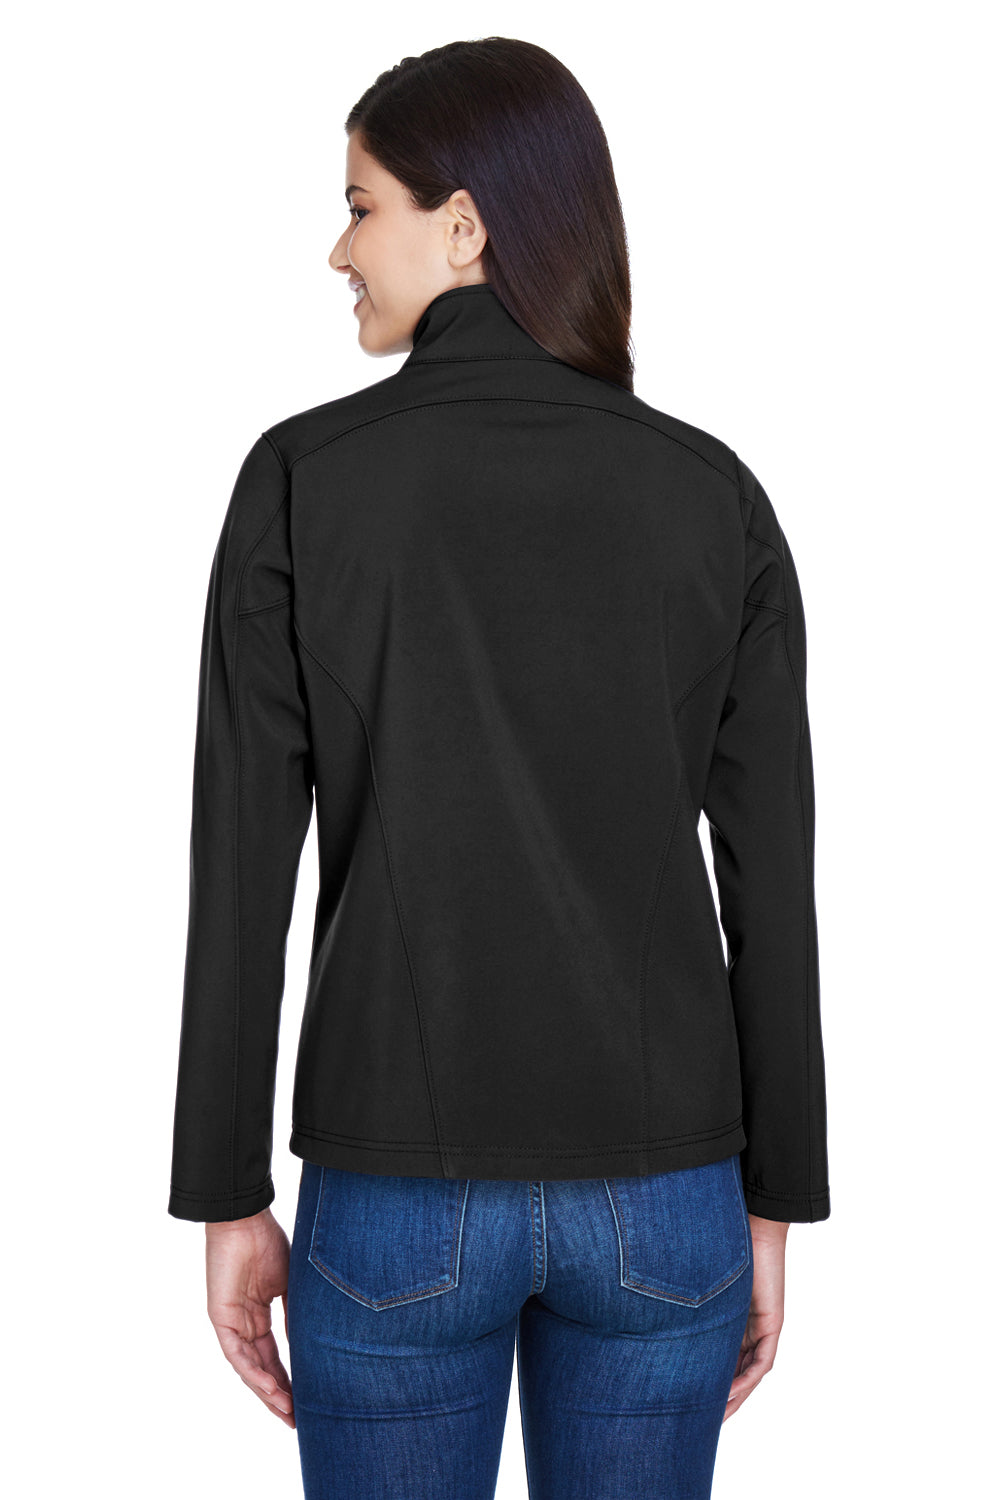 Core 365 78184 Womens Cruise Water Resistant Full Zip Jacket Black Back